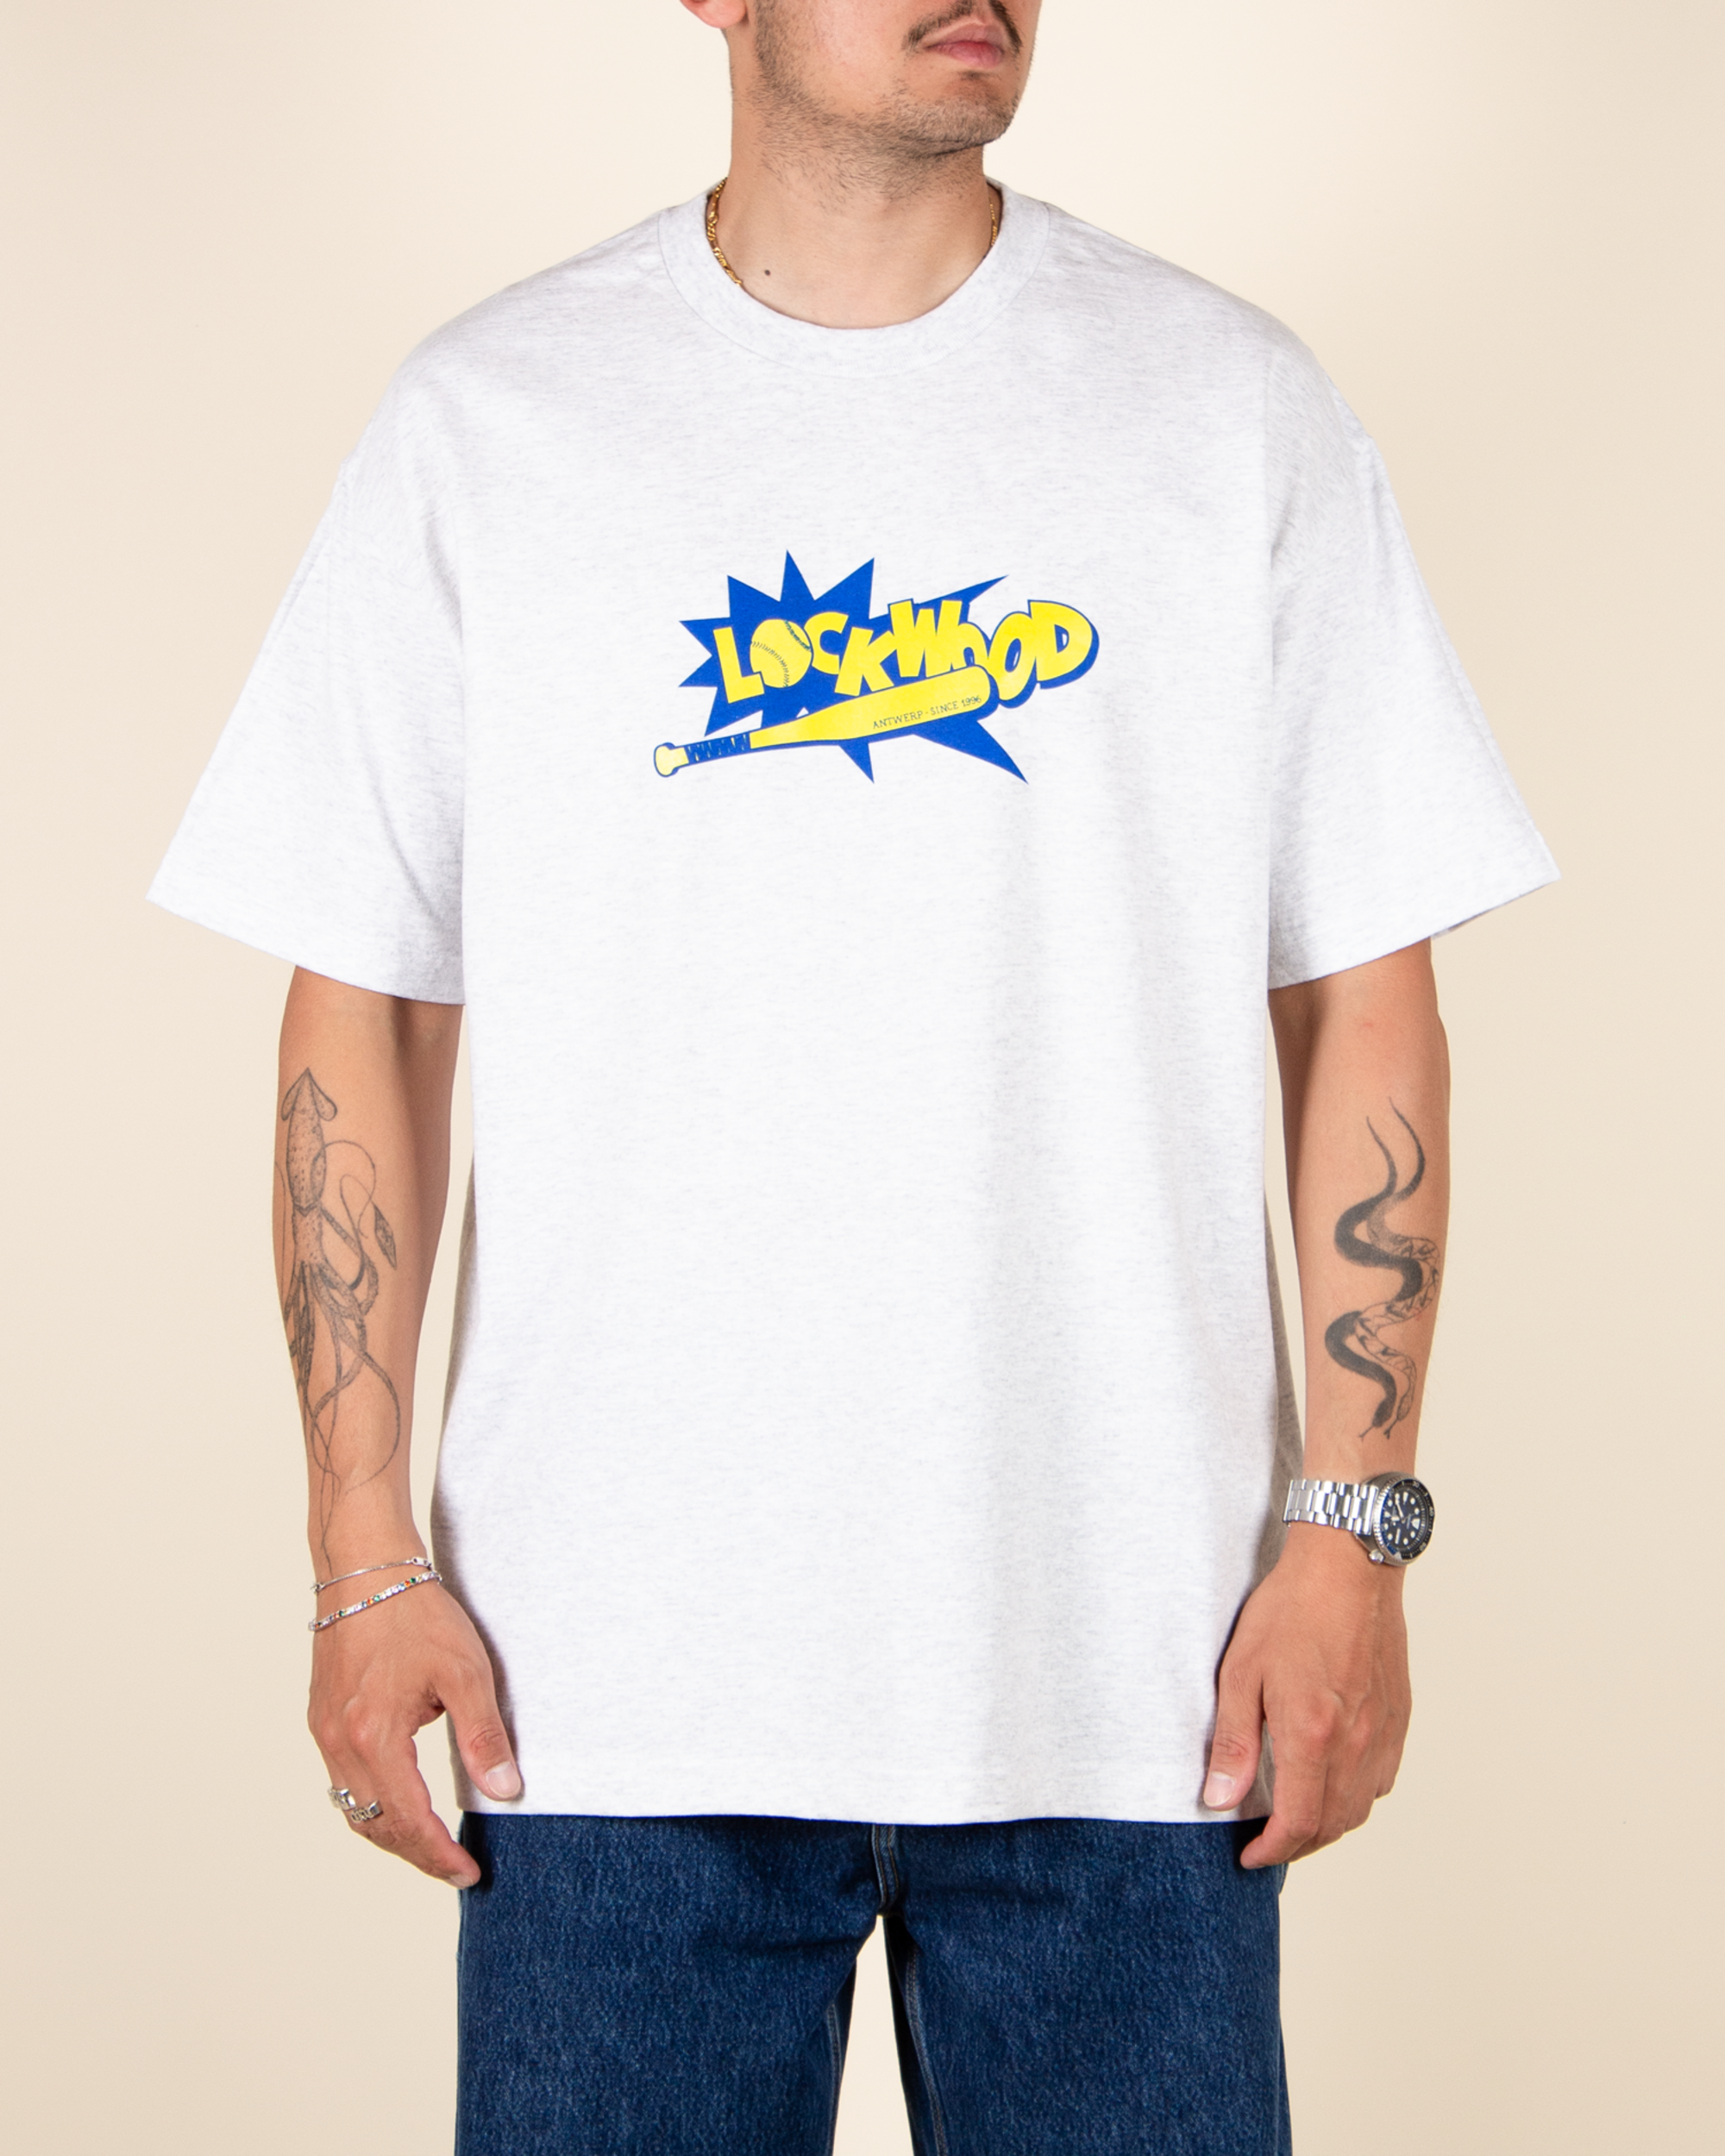 Lockwood Baseball T-shirt - Grey Melange